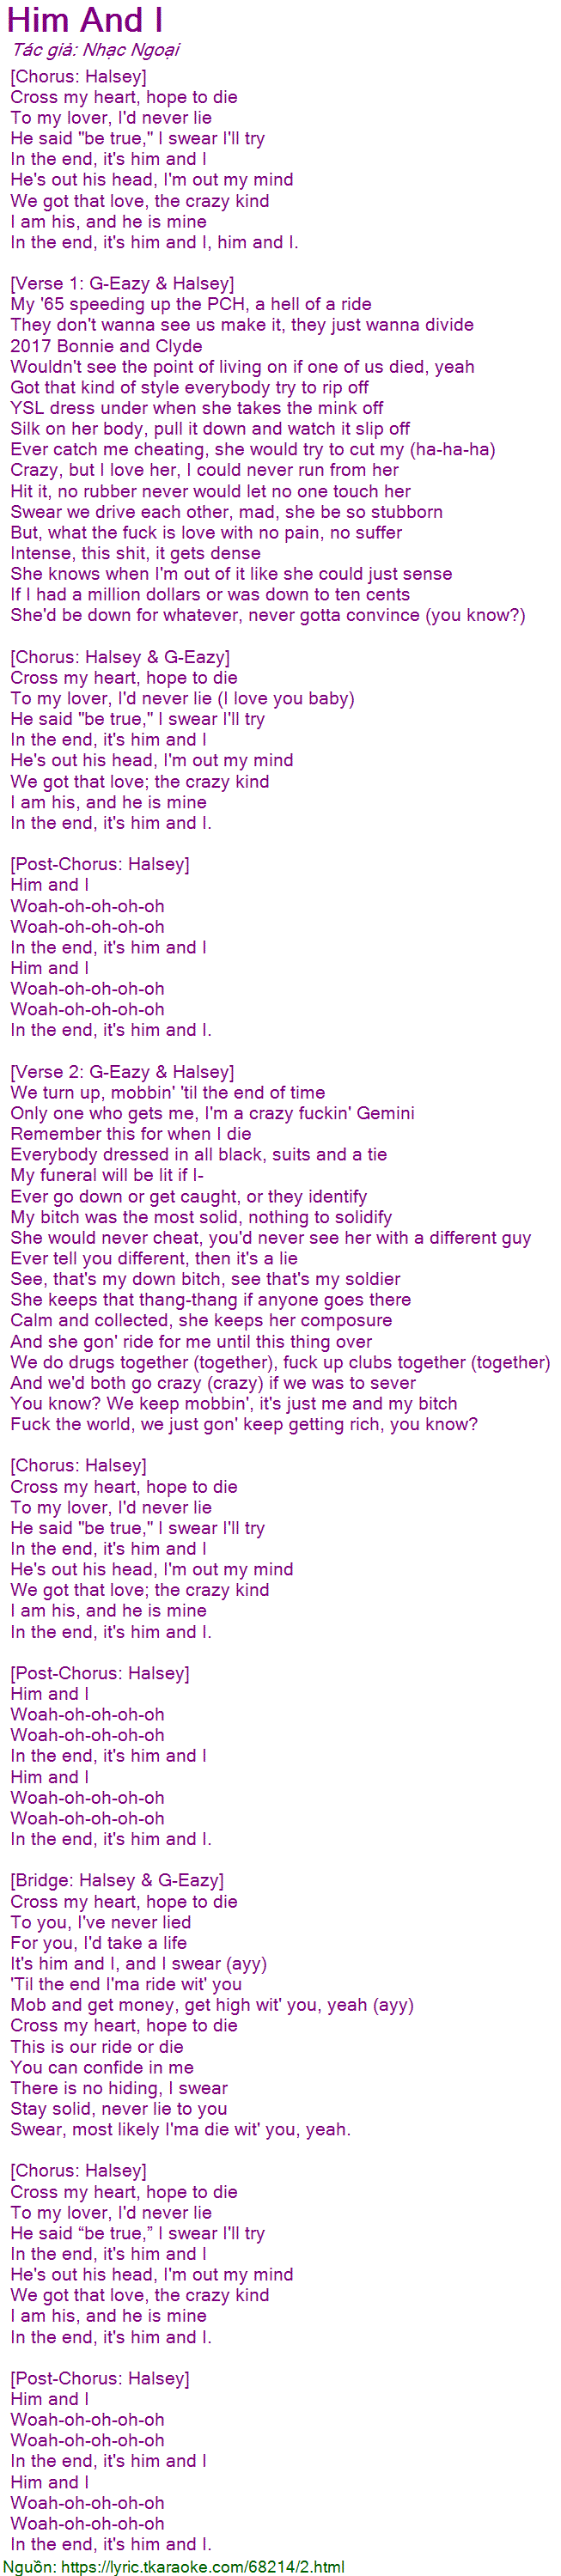 G-Eazy & Halsey - Him & I (Lyrics) Cross my heart hope to die